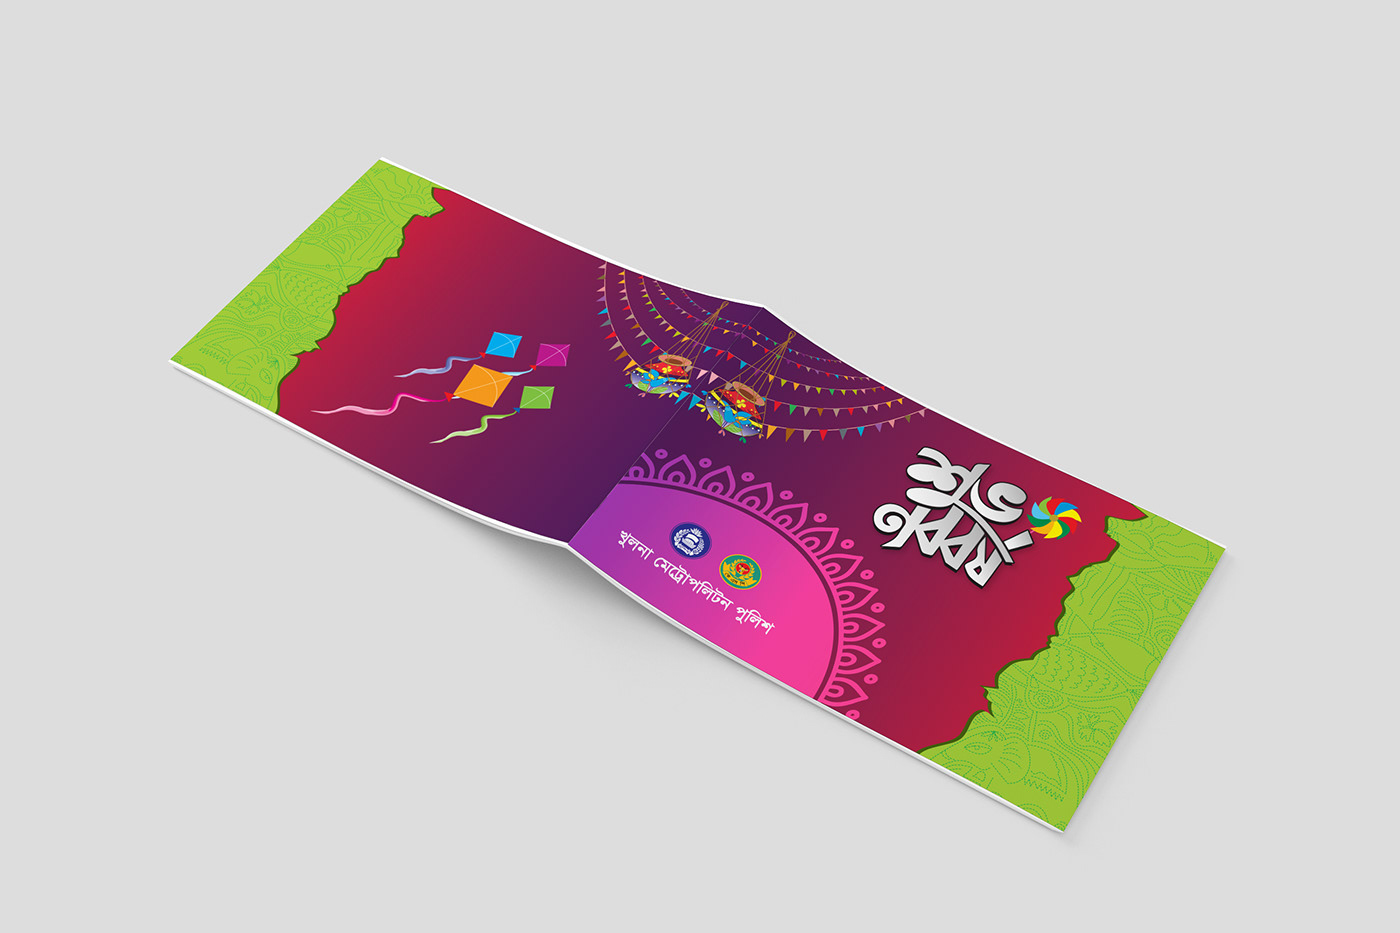 Pohela Boishakh Invitation Card শুভ নববর্ষ পহেলা বৈশাখ কার্ড শুভ নববর্ষ কার্ড